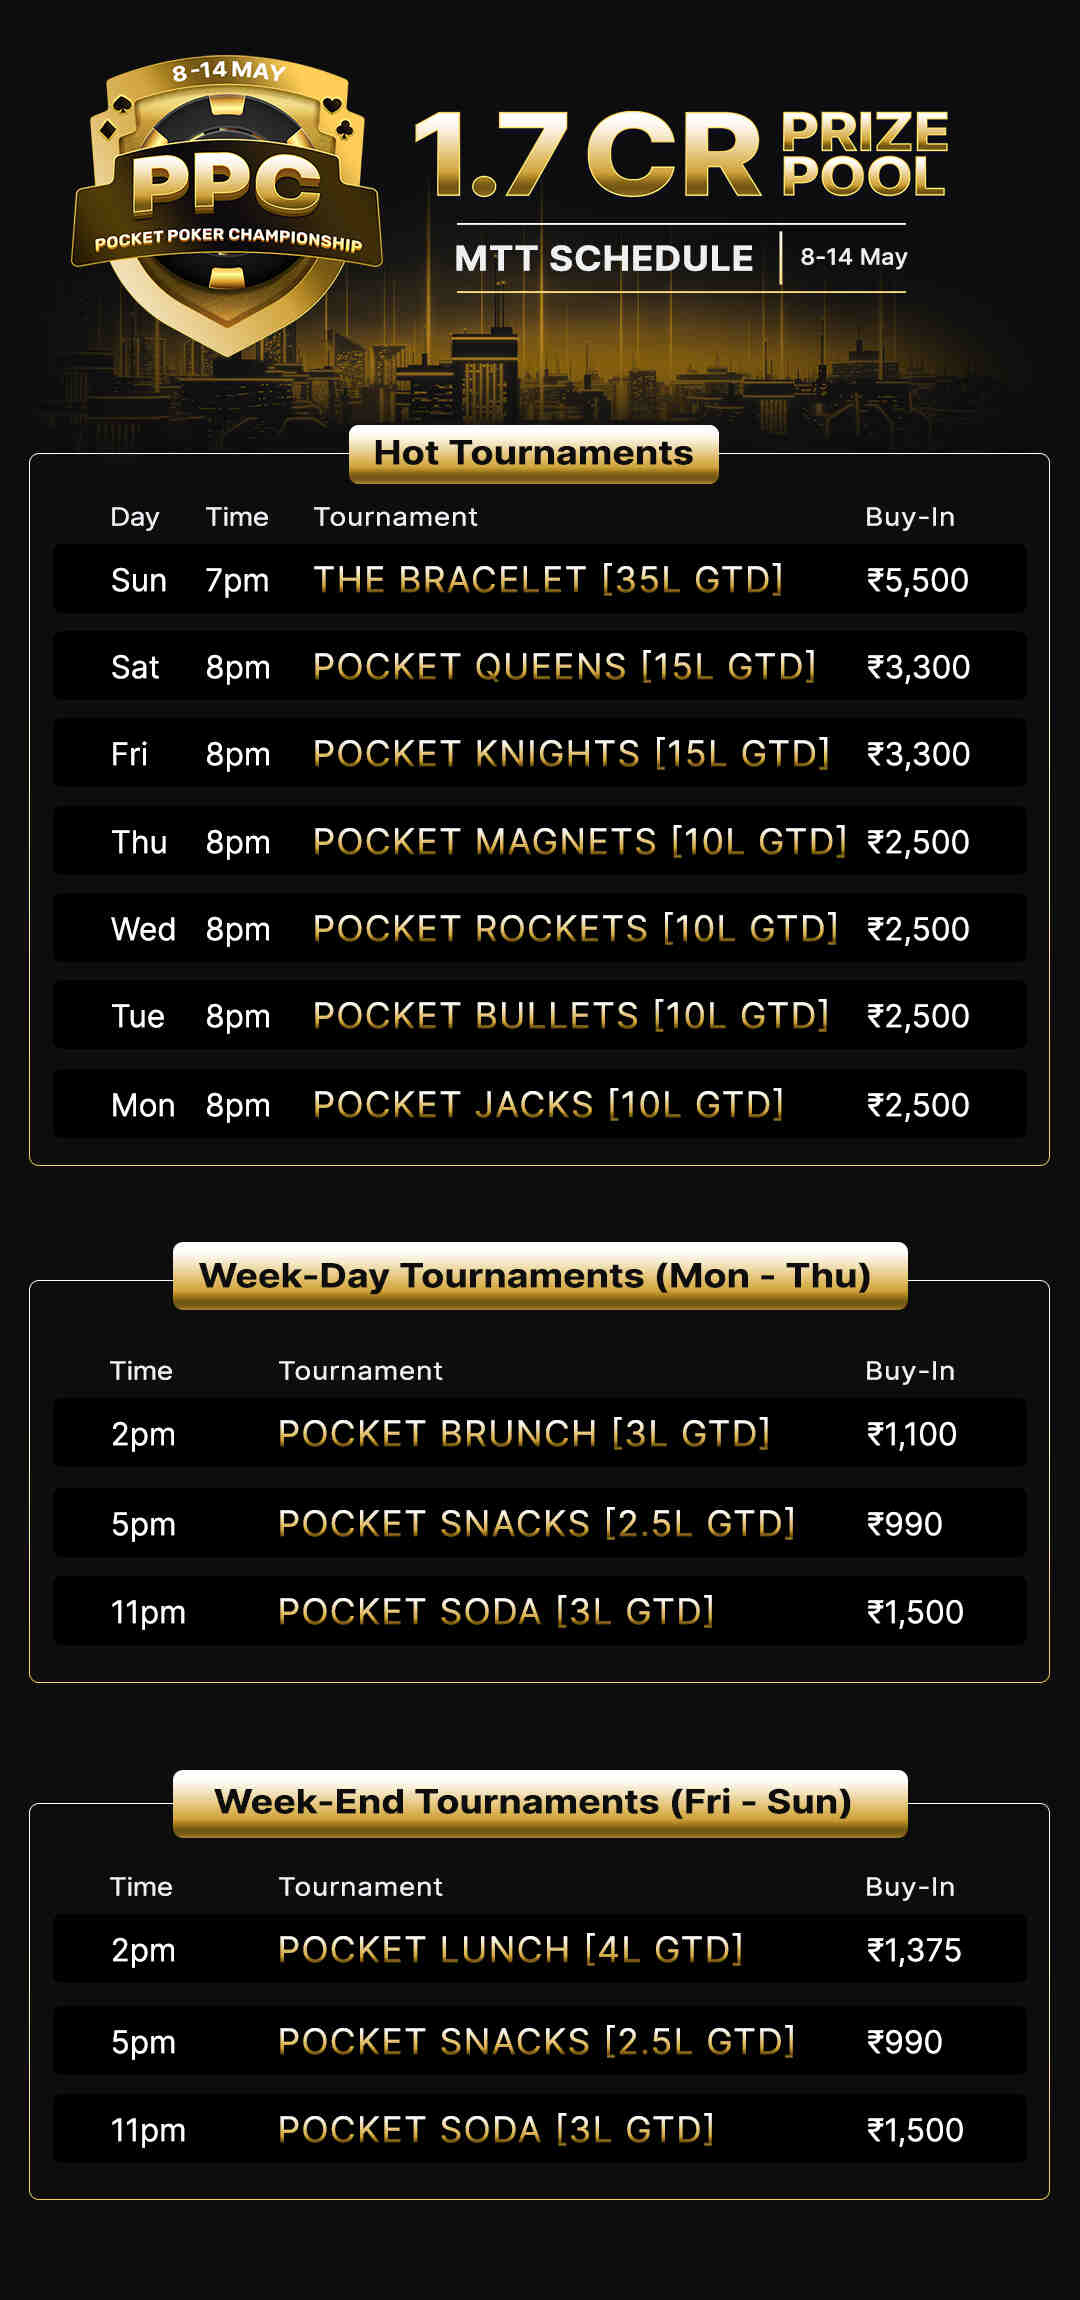 Pocket52 Pocket Poker Championship series ₹1.7 Crore GTD